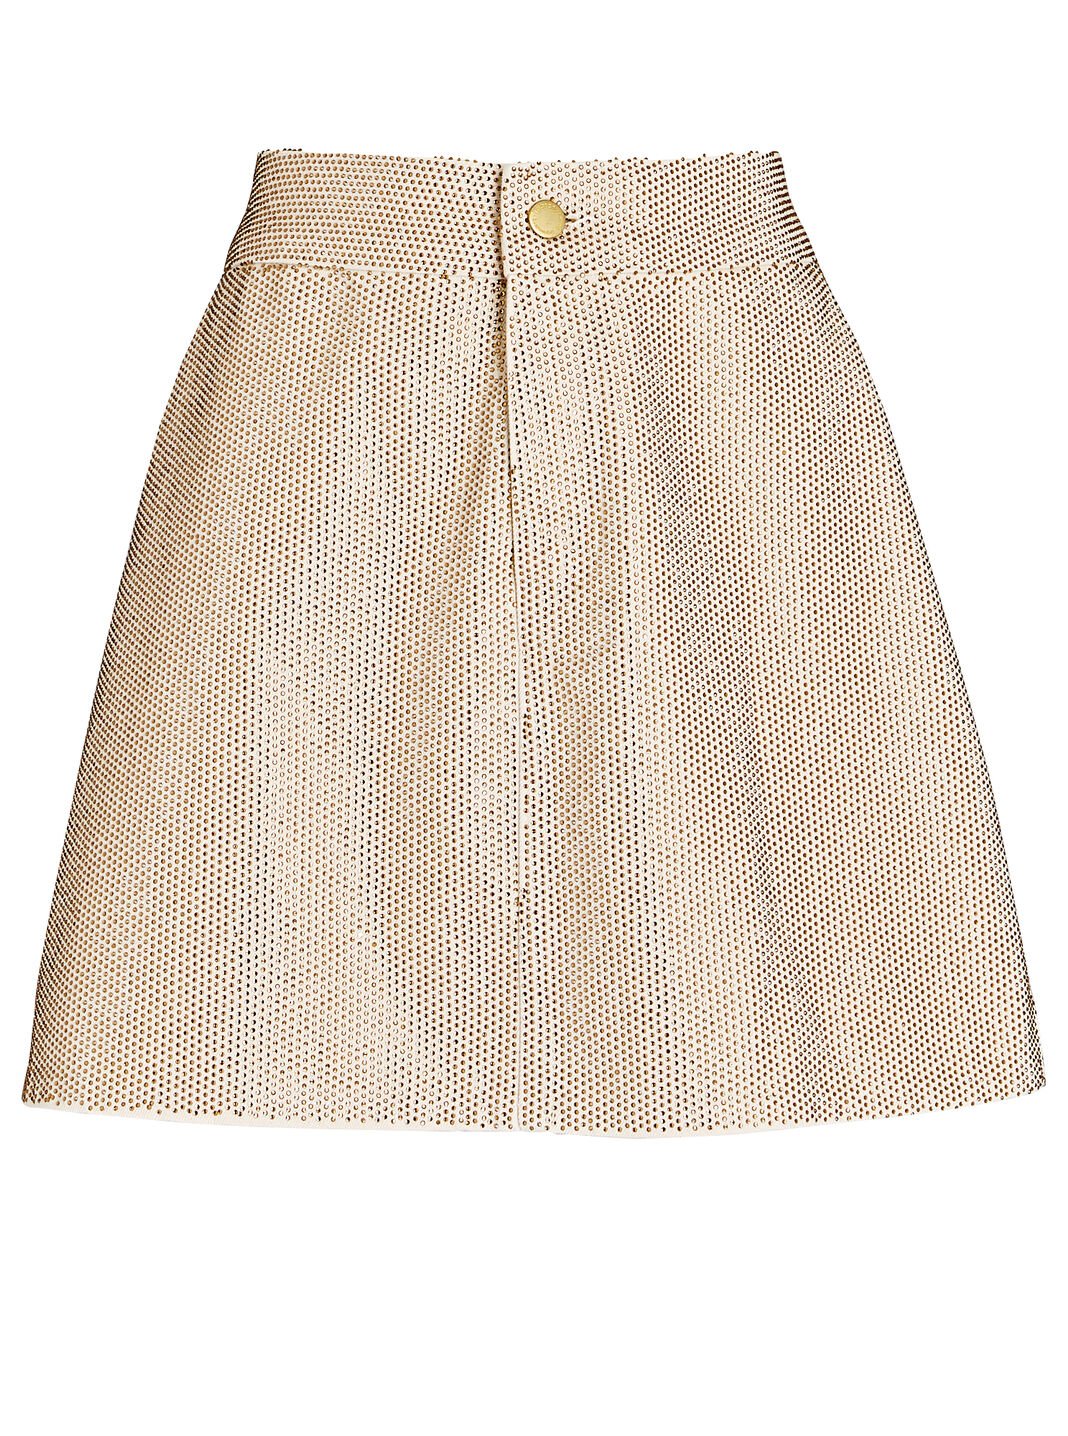 Ms. Triarchy Embellished Denim Mini Skirt